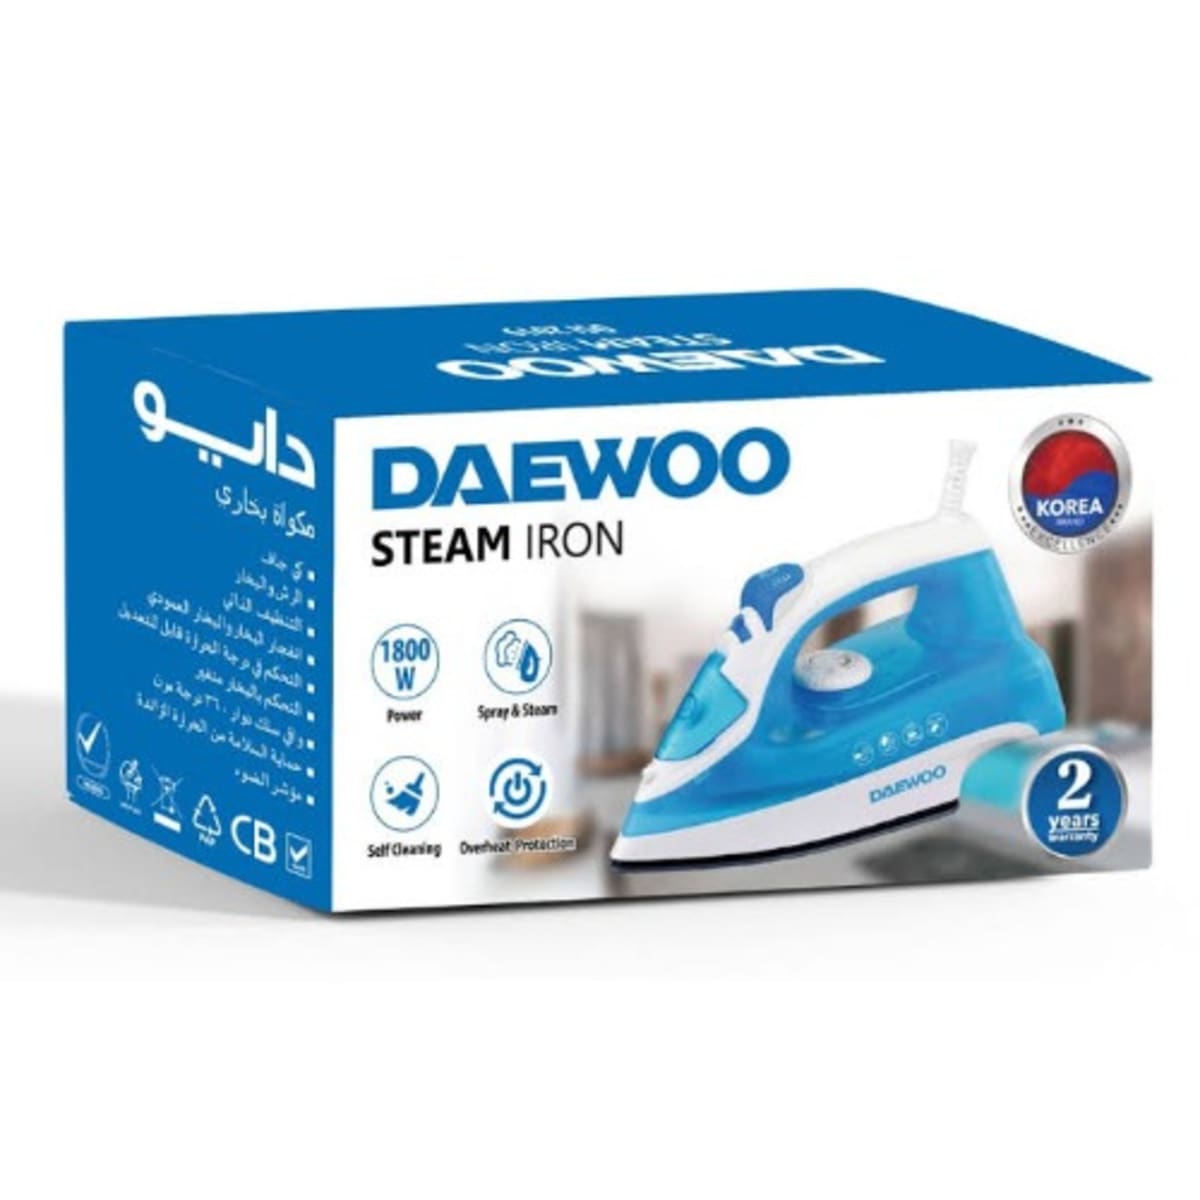 Daewoo Steam Pressing Iron - 1600 Watts